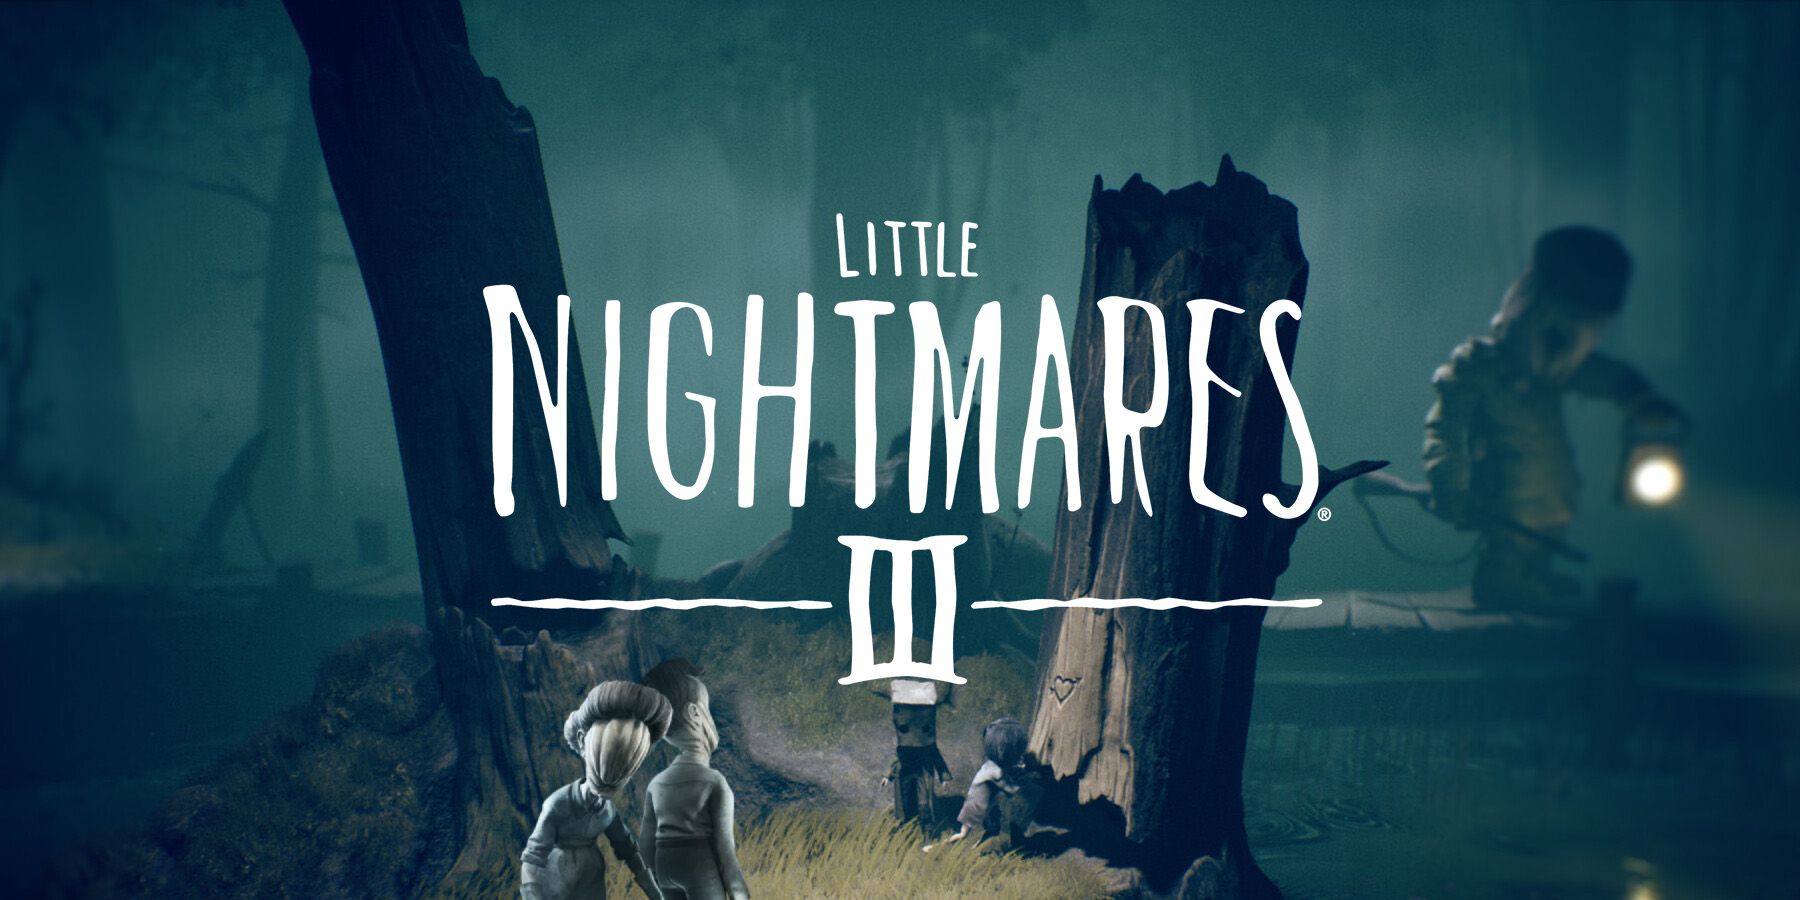 Little Nightmares 3, Bandai Namco